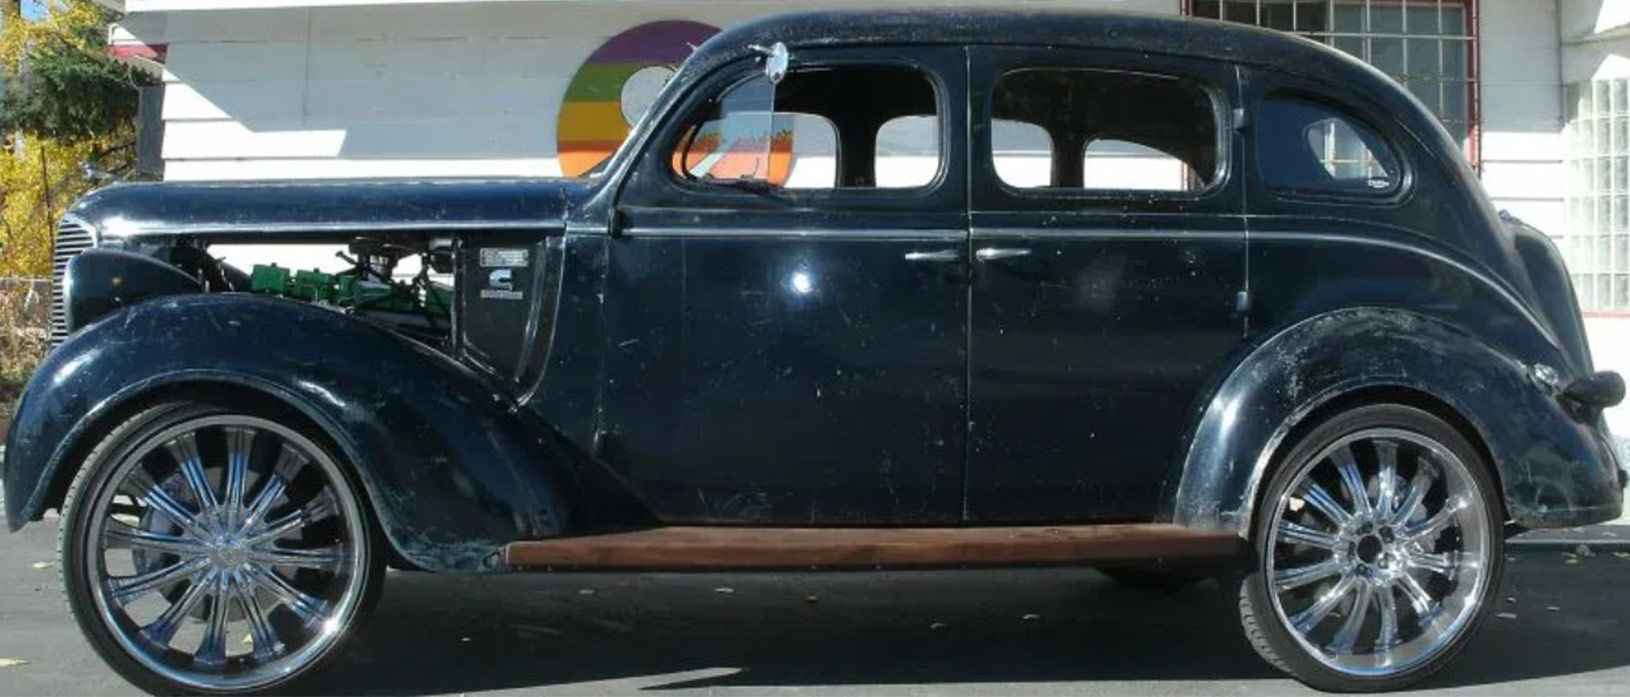 1938 dodge sedan